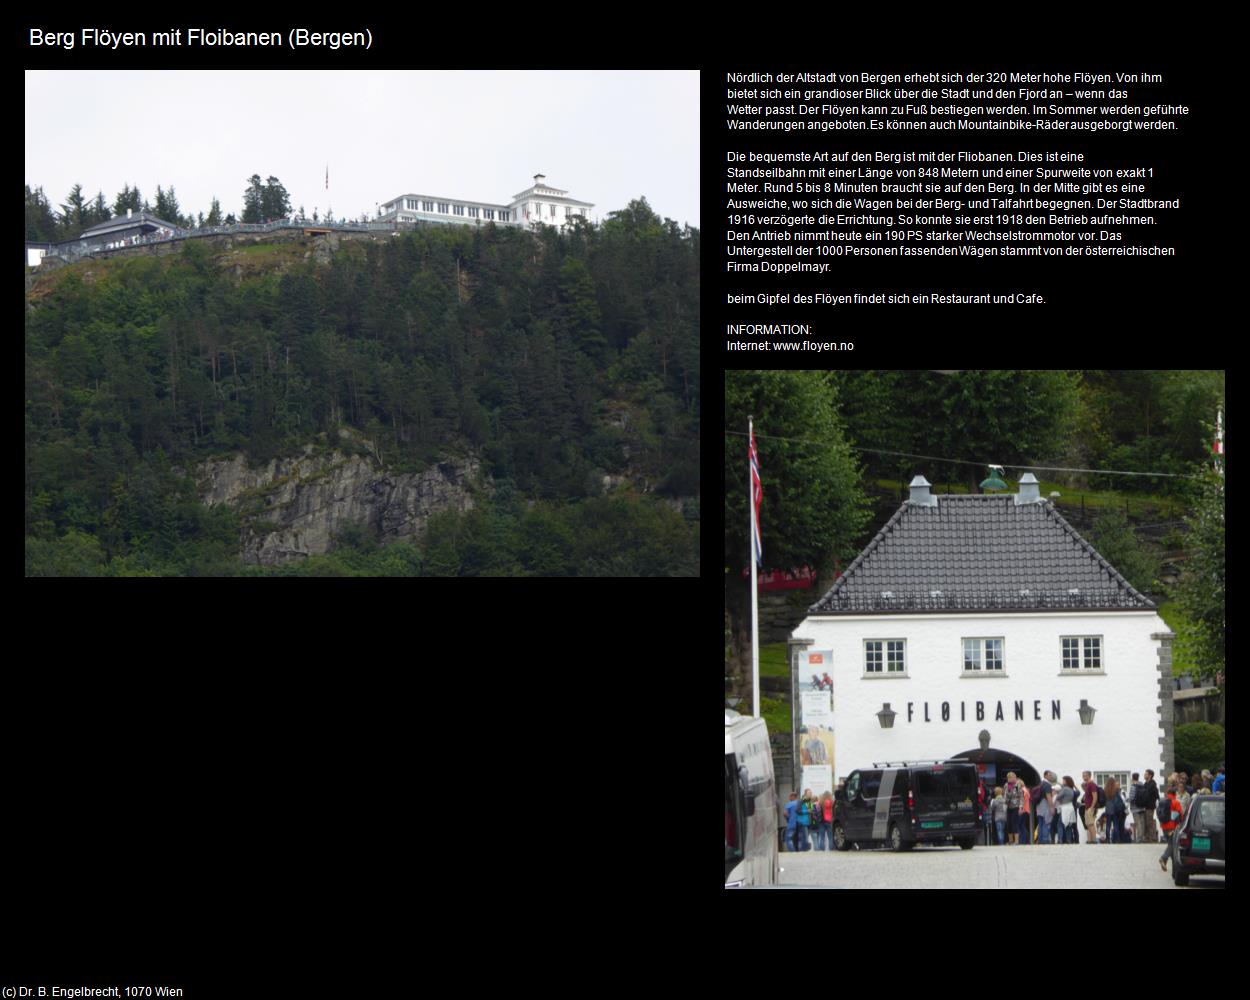 Berg Flöyen mit Floibanen (Bergen) in Kulturatlas-REISE nach NORWEGEN